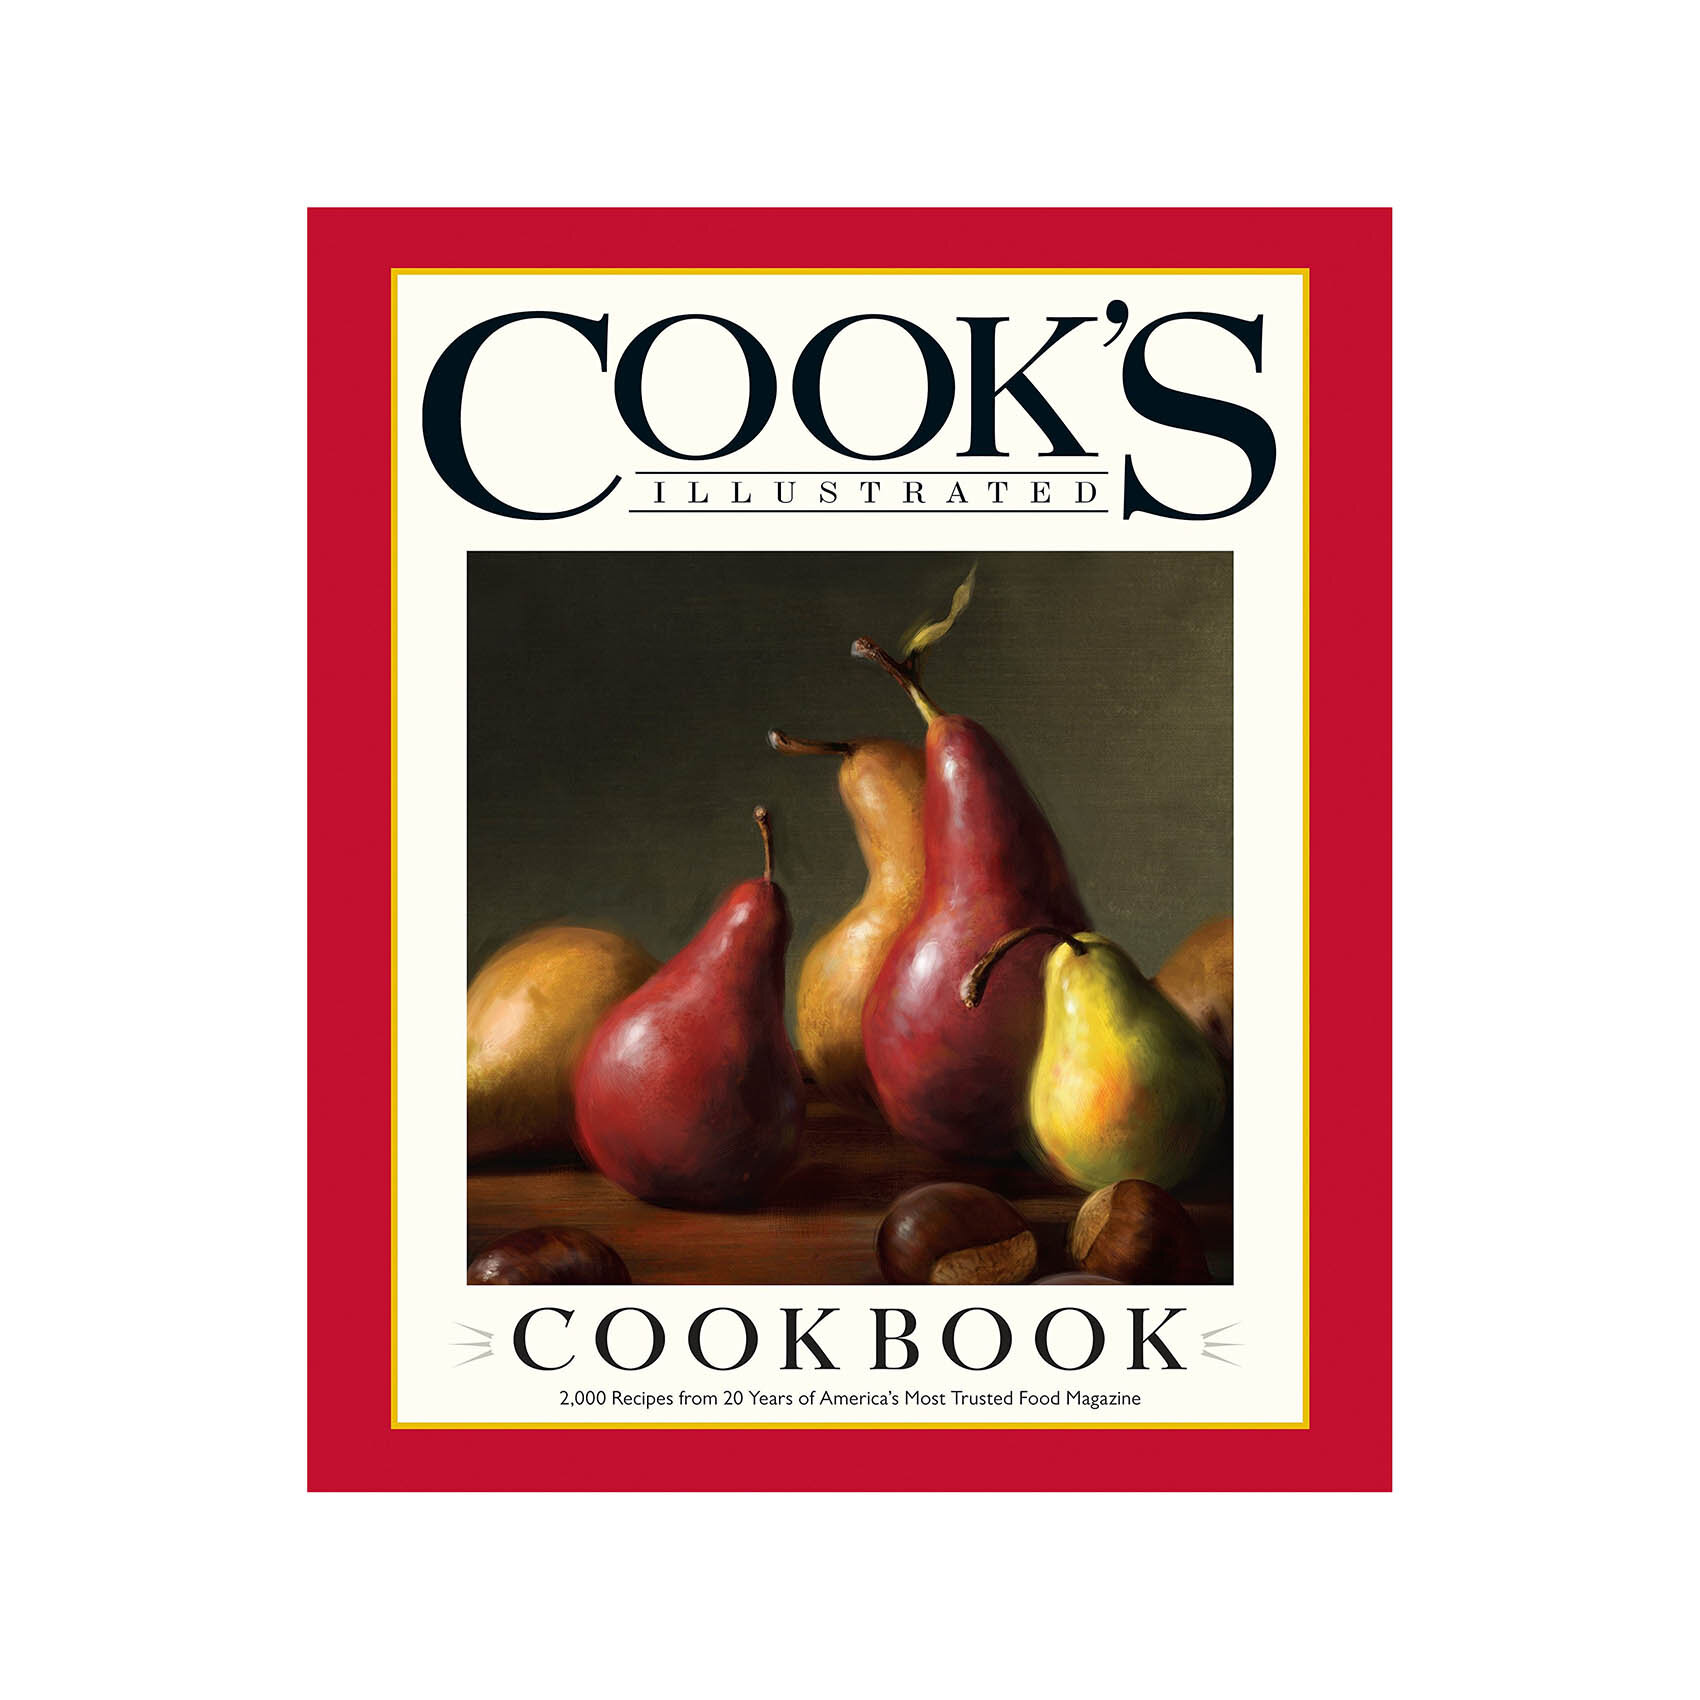 The Cooks Illustrated Cookbook